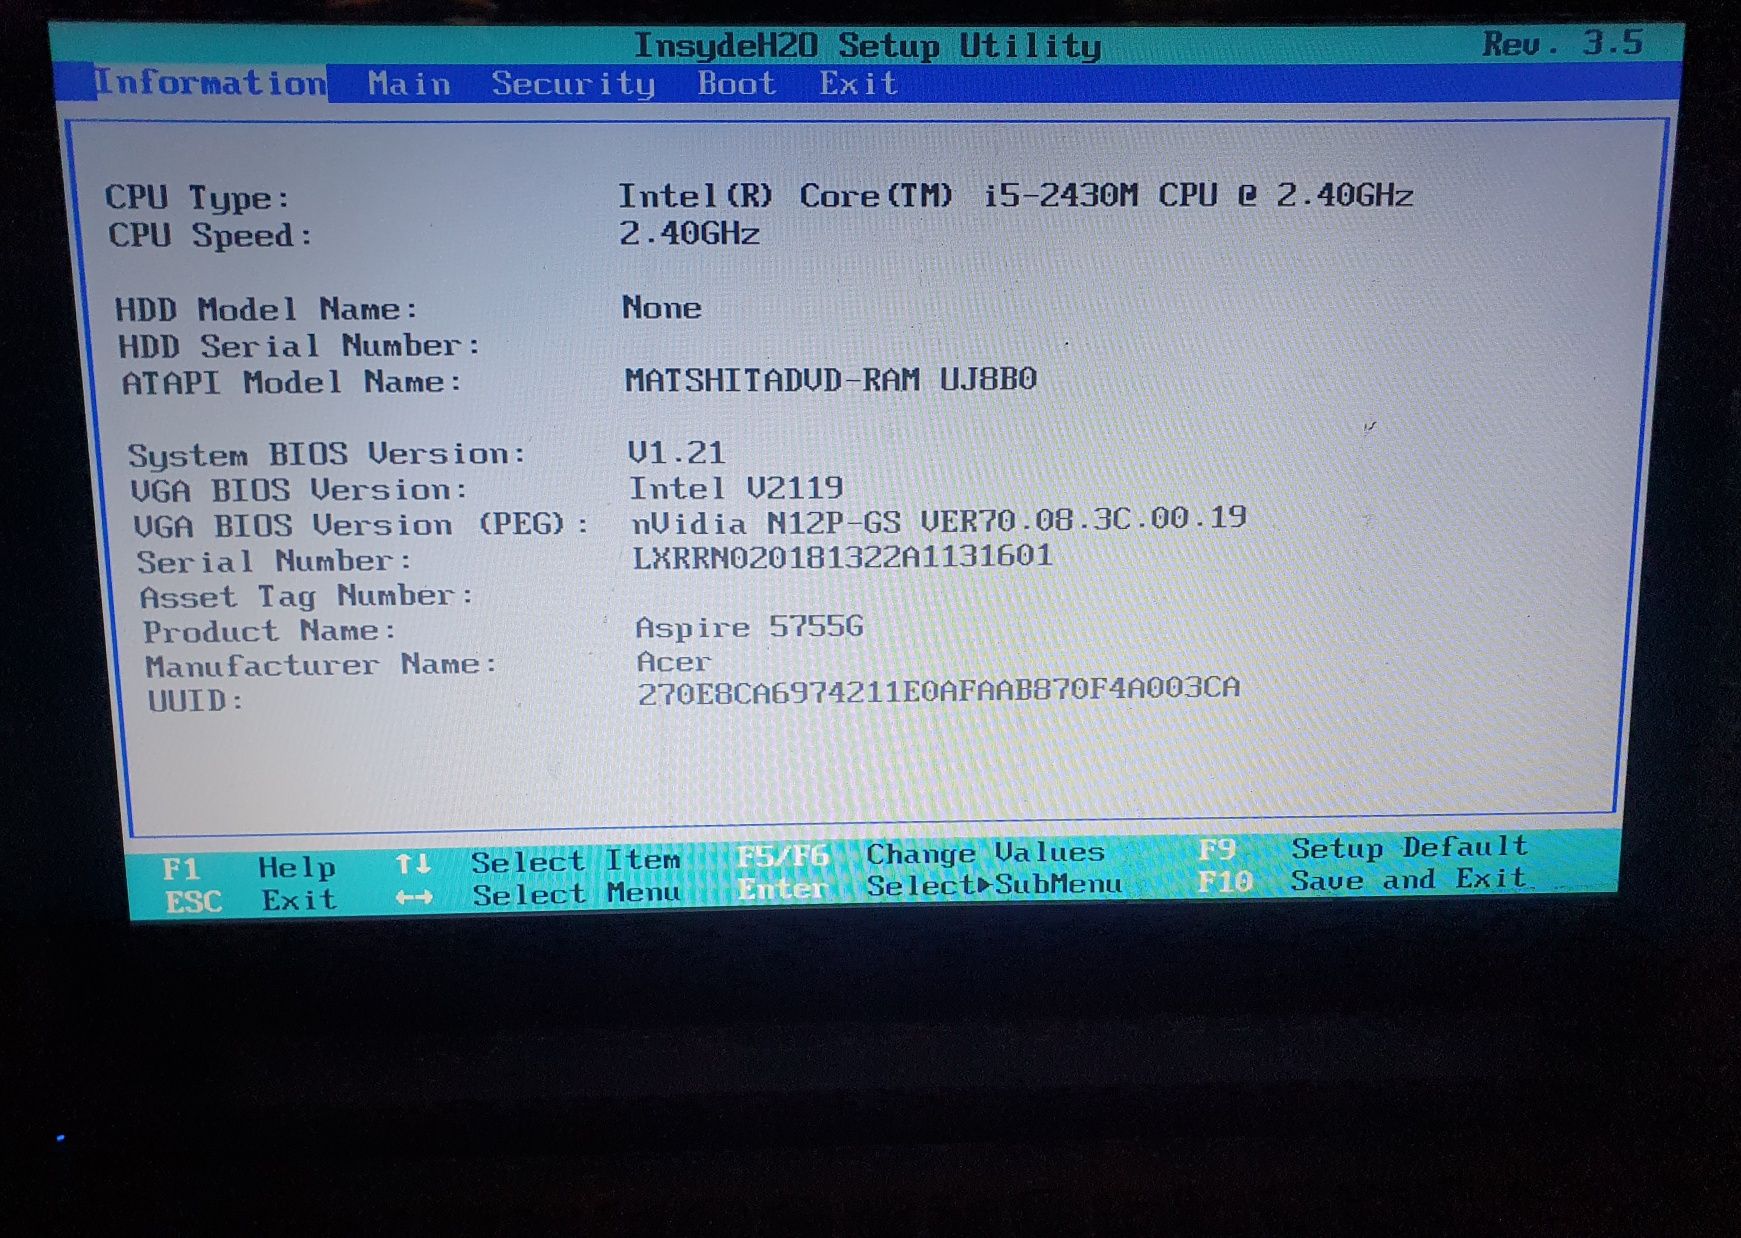 Laptop Acer cu i5 si video nvidia gt540, 4gb ram